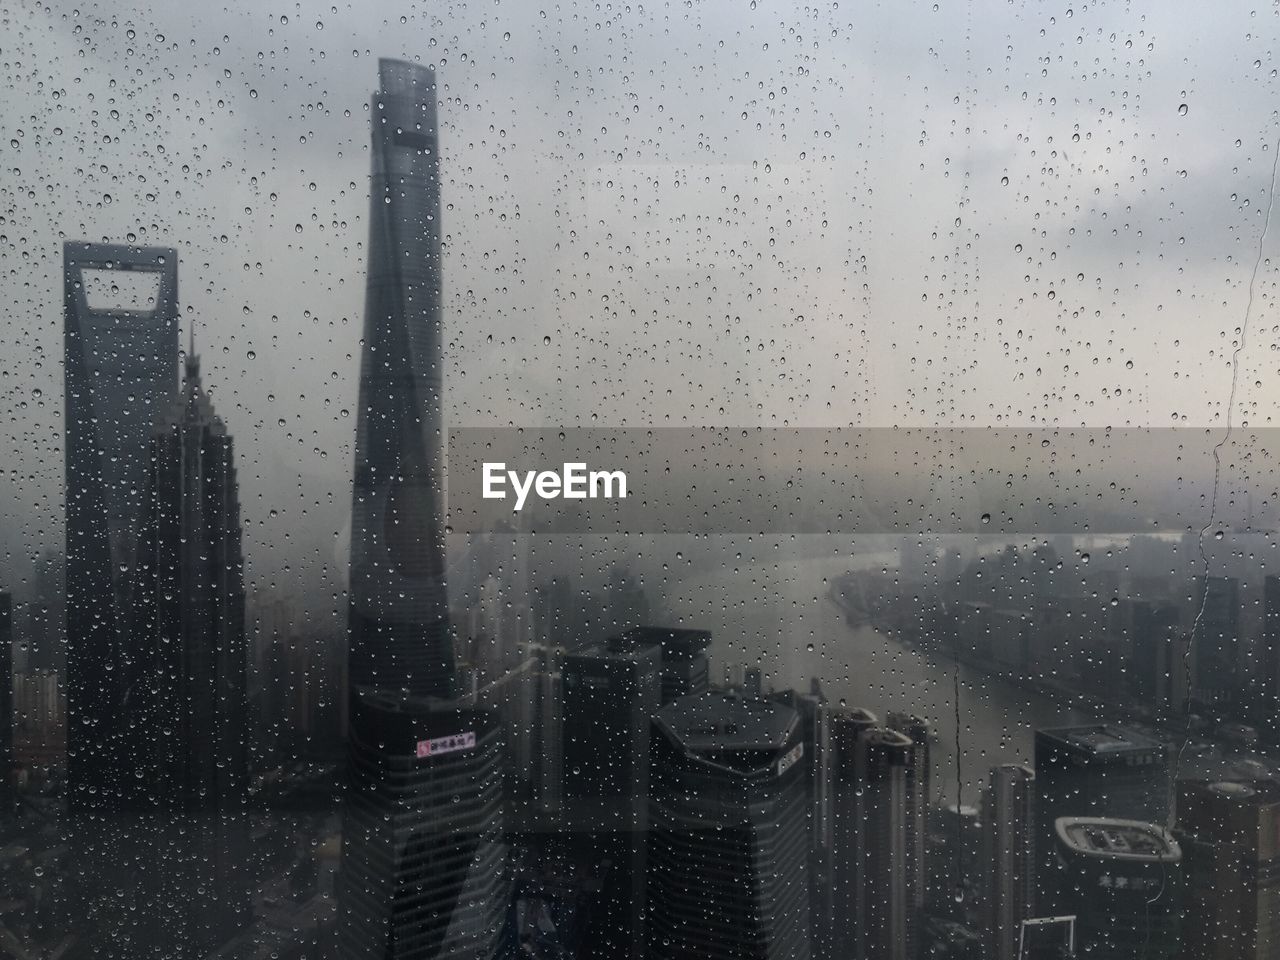 Buildings in city seen through wet window during rainy season